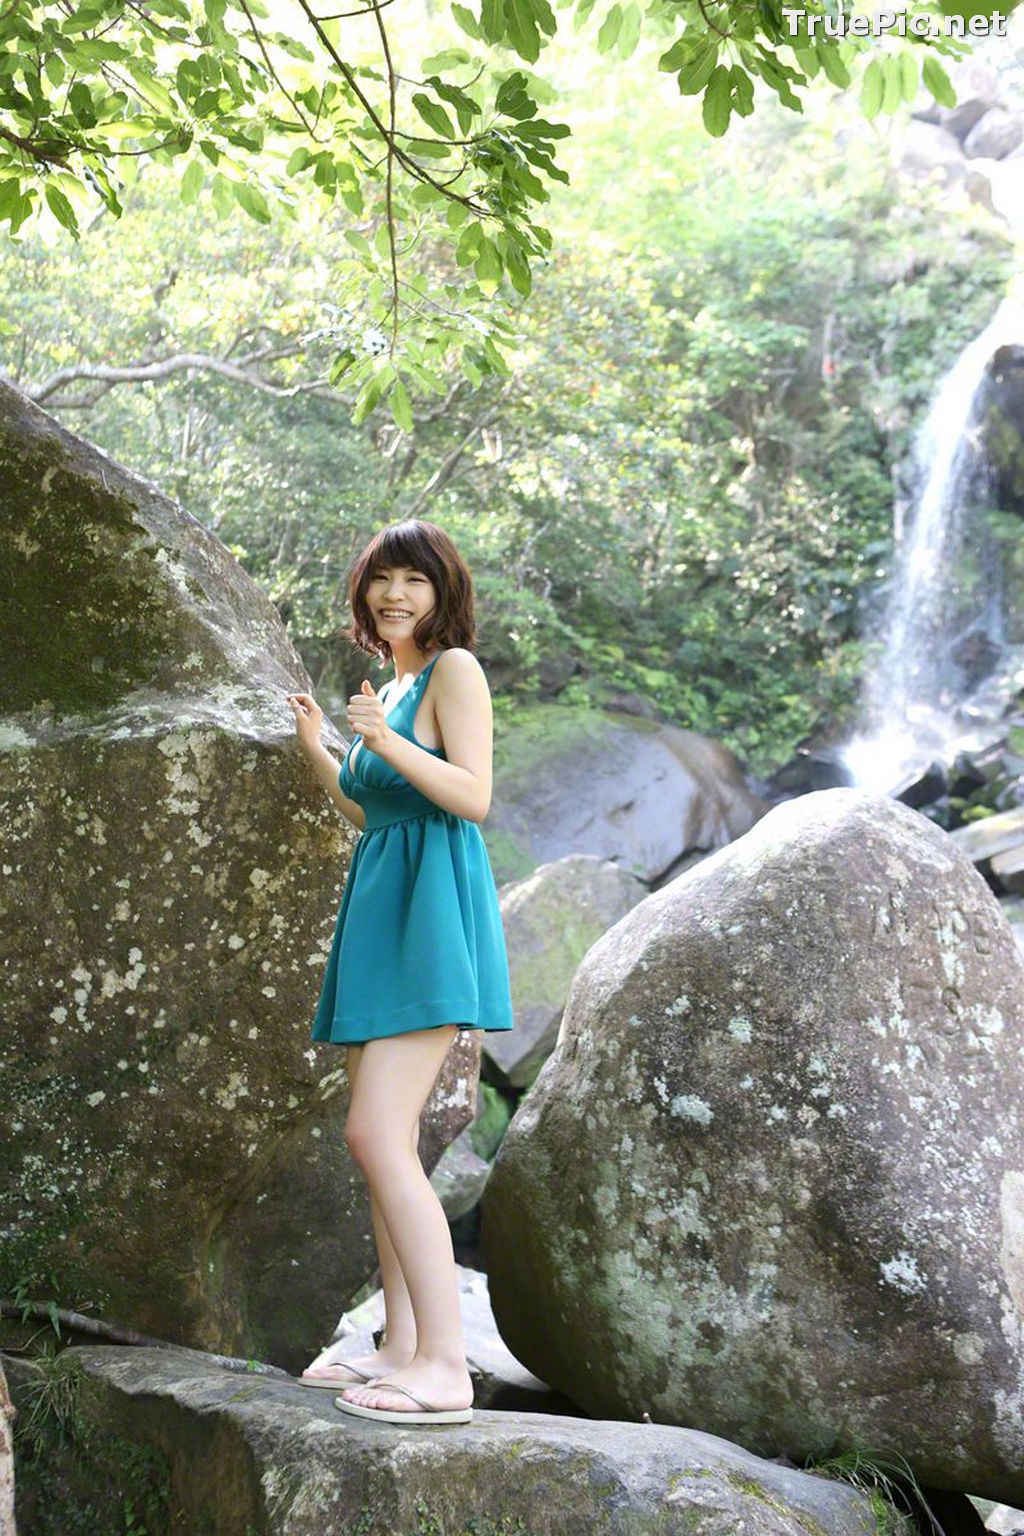 Wanibooks No 122 Japanese Gravure Idol And Actress Asuka Kishi